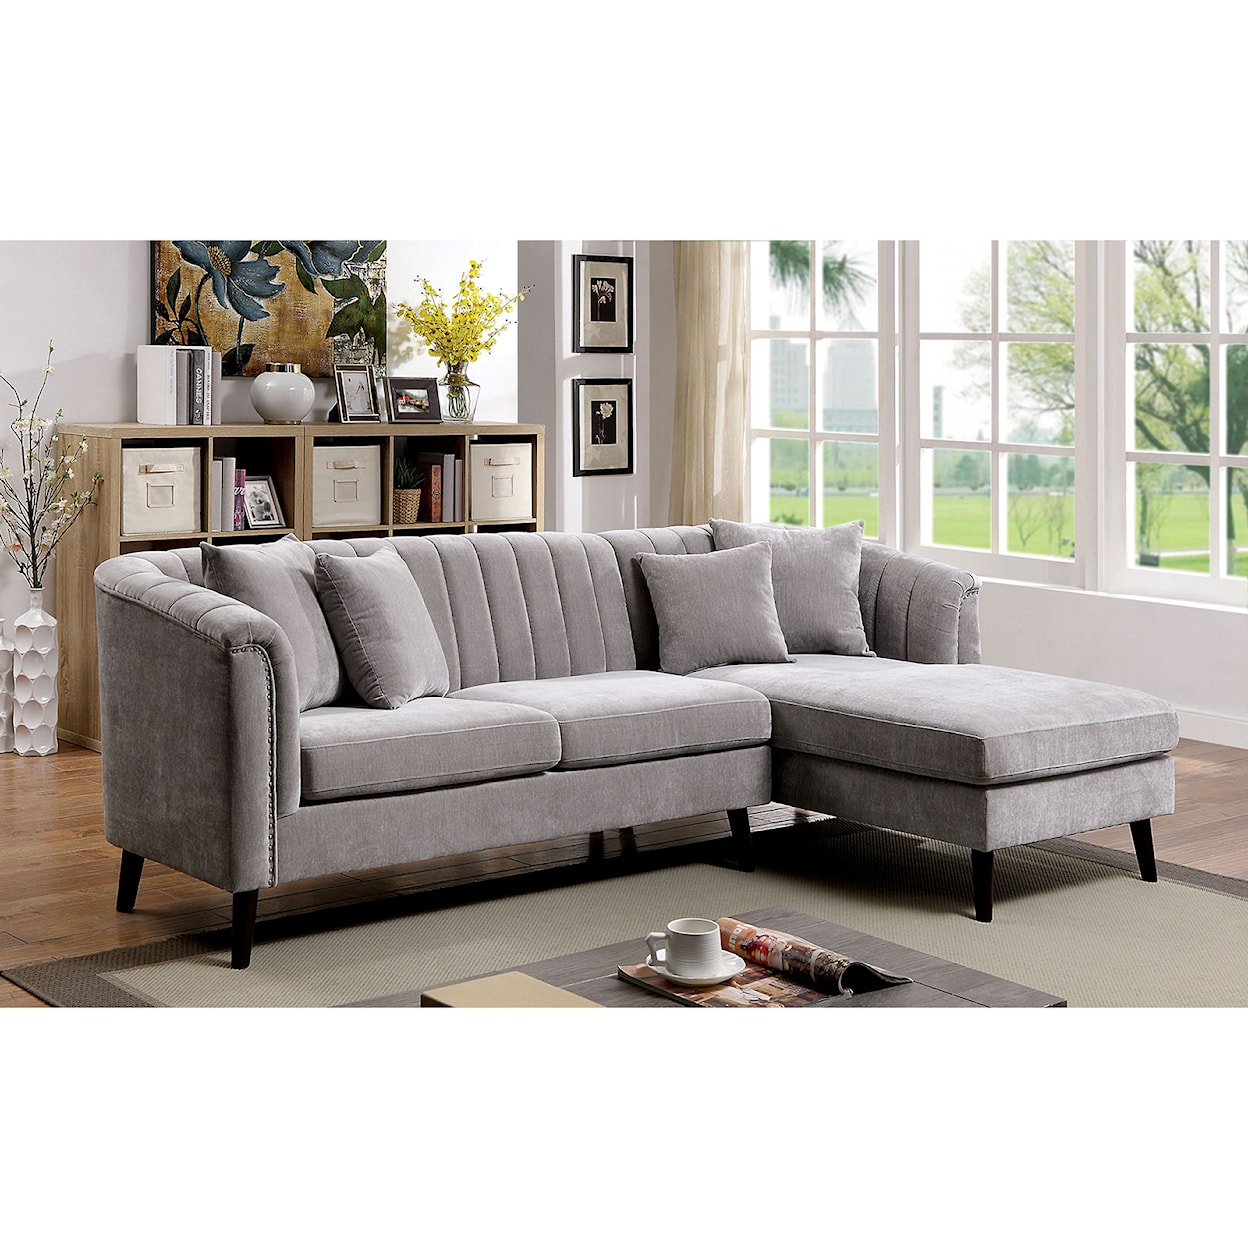 Furniture of America Goodwick Sofa Chaise